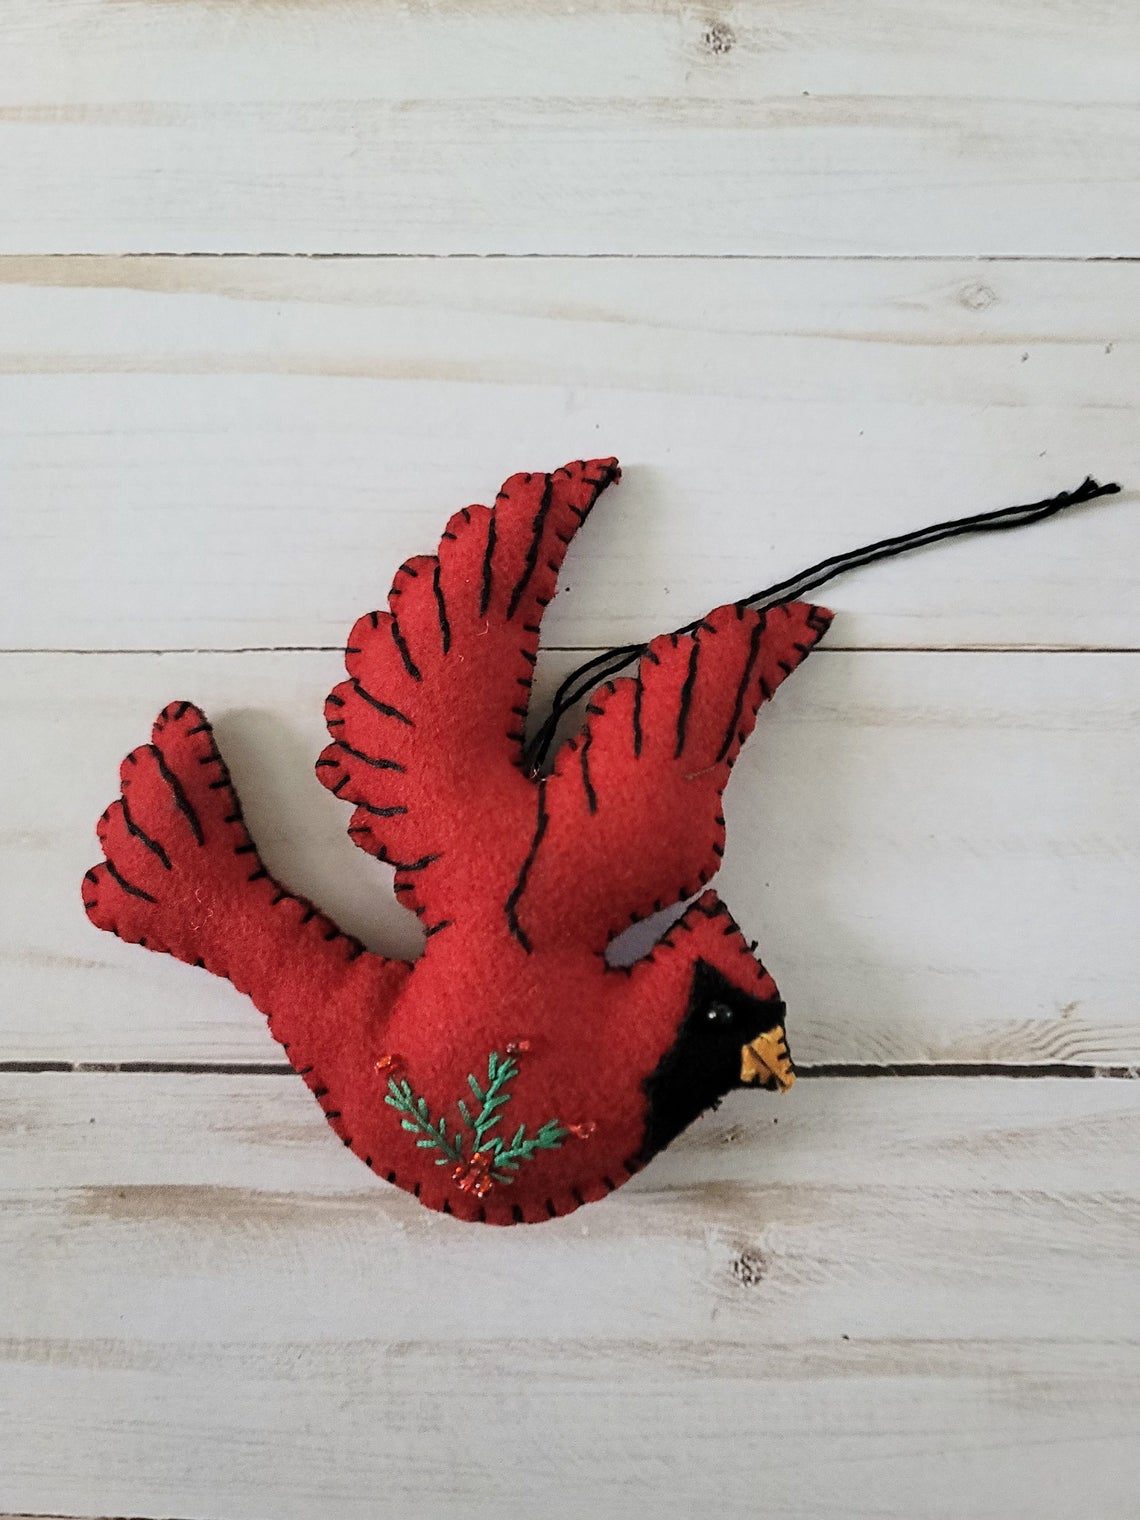 Red Cardinal Felt Ornament - Aribella Collection, Inc.